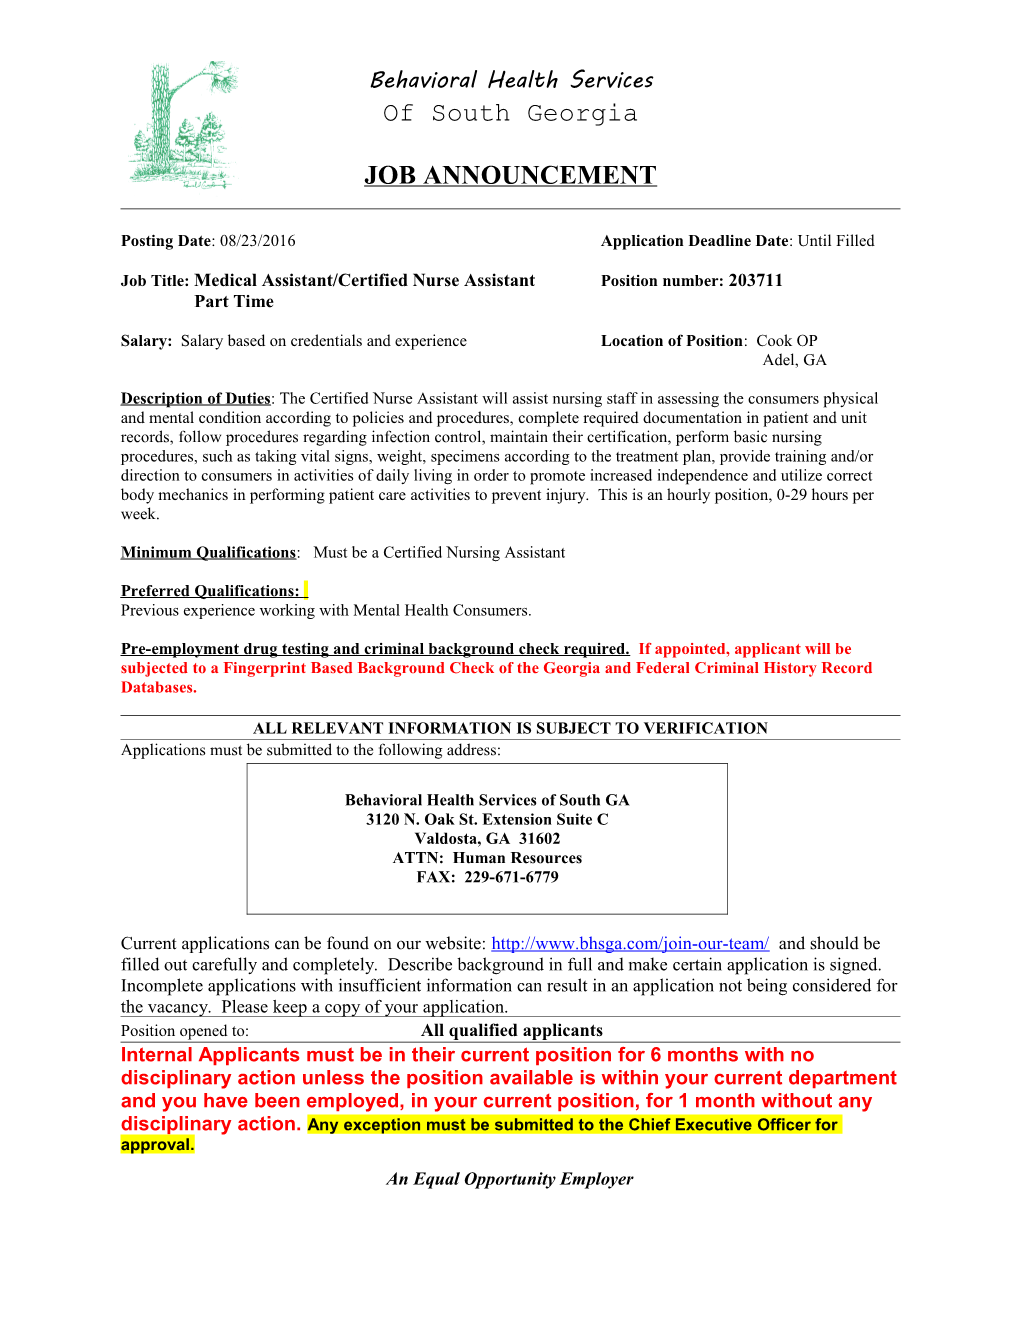 Job Title: Medical Assistant/Certified Nurse Assistant Position Number: 203711